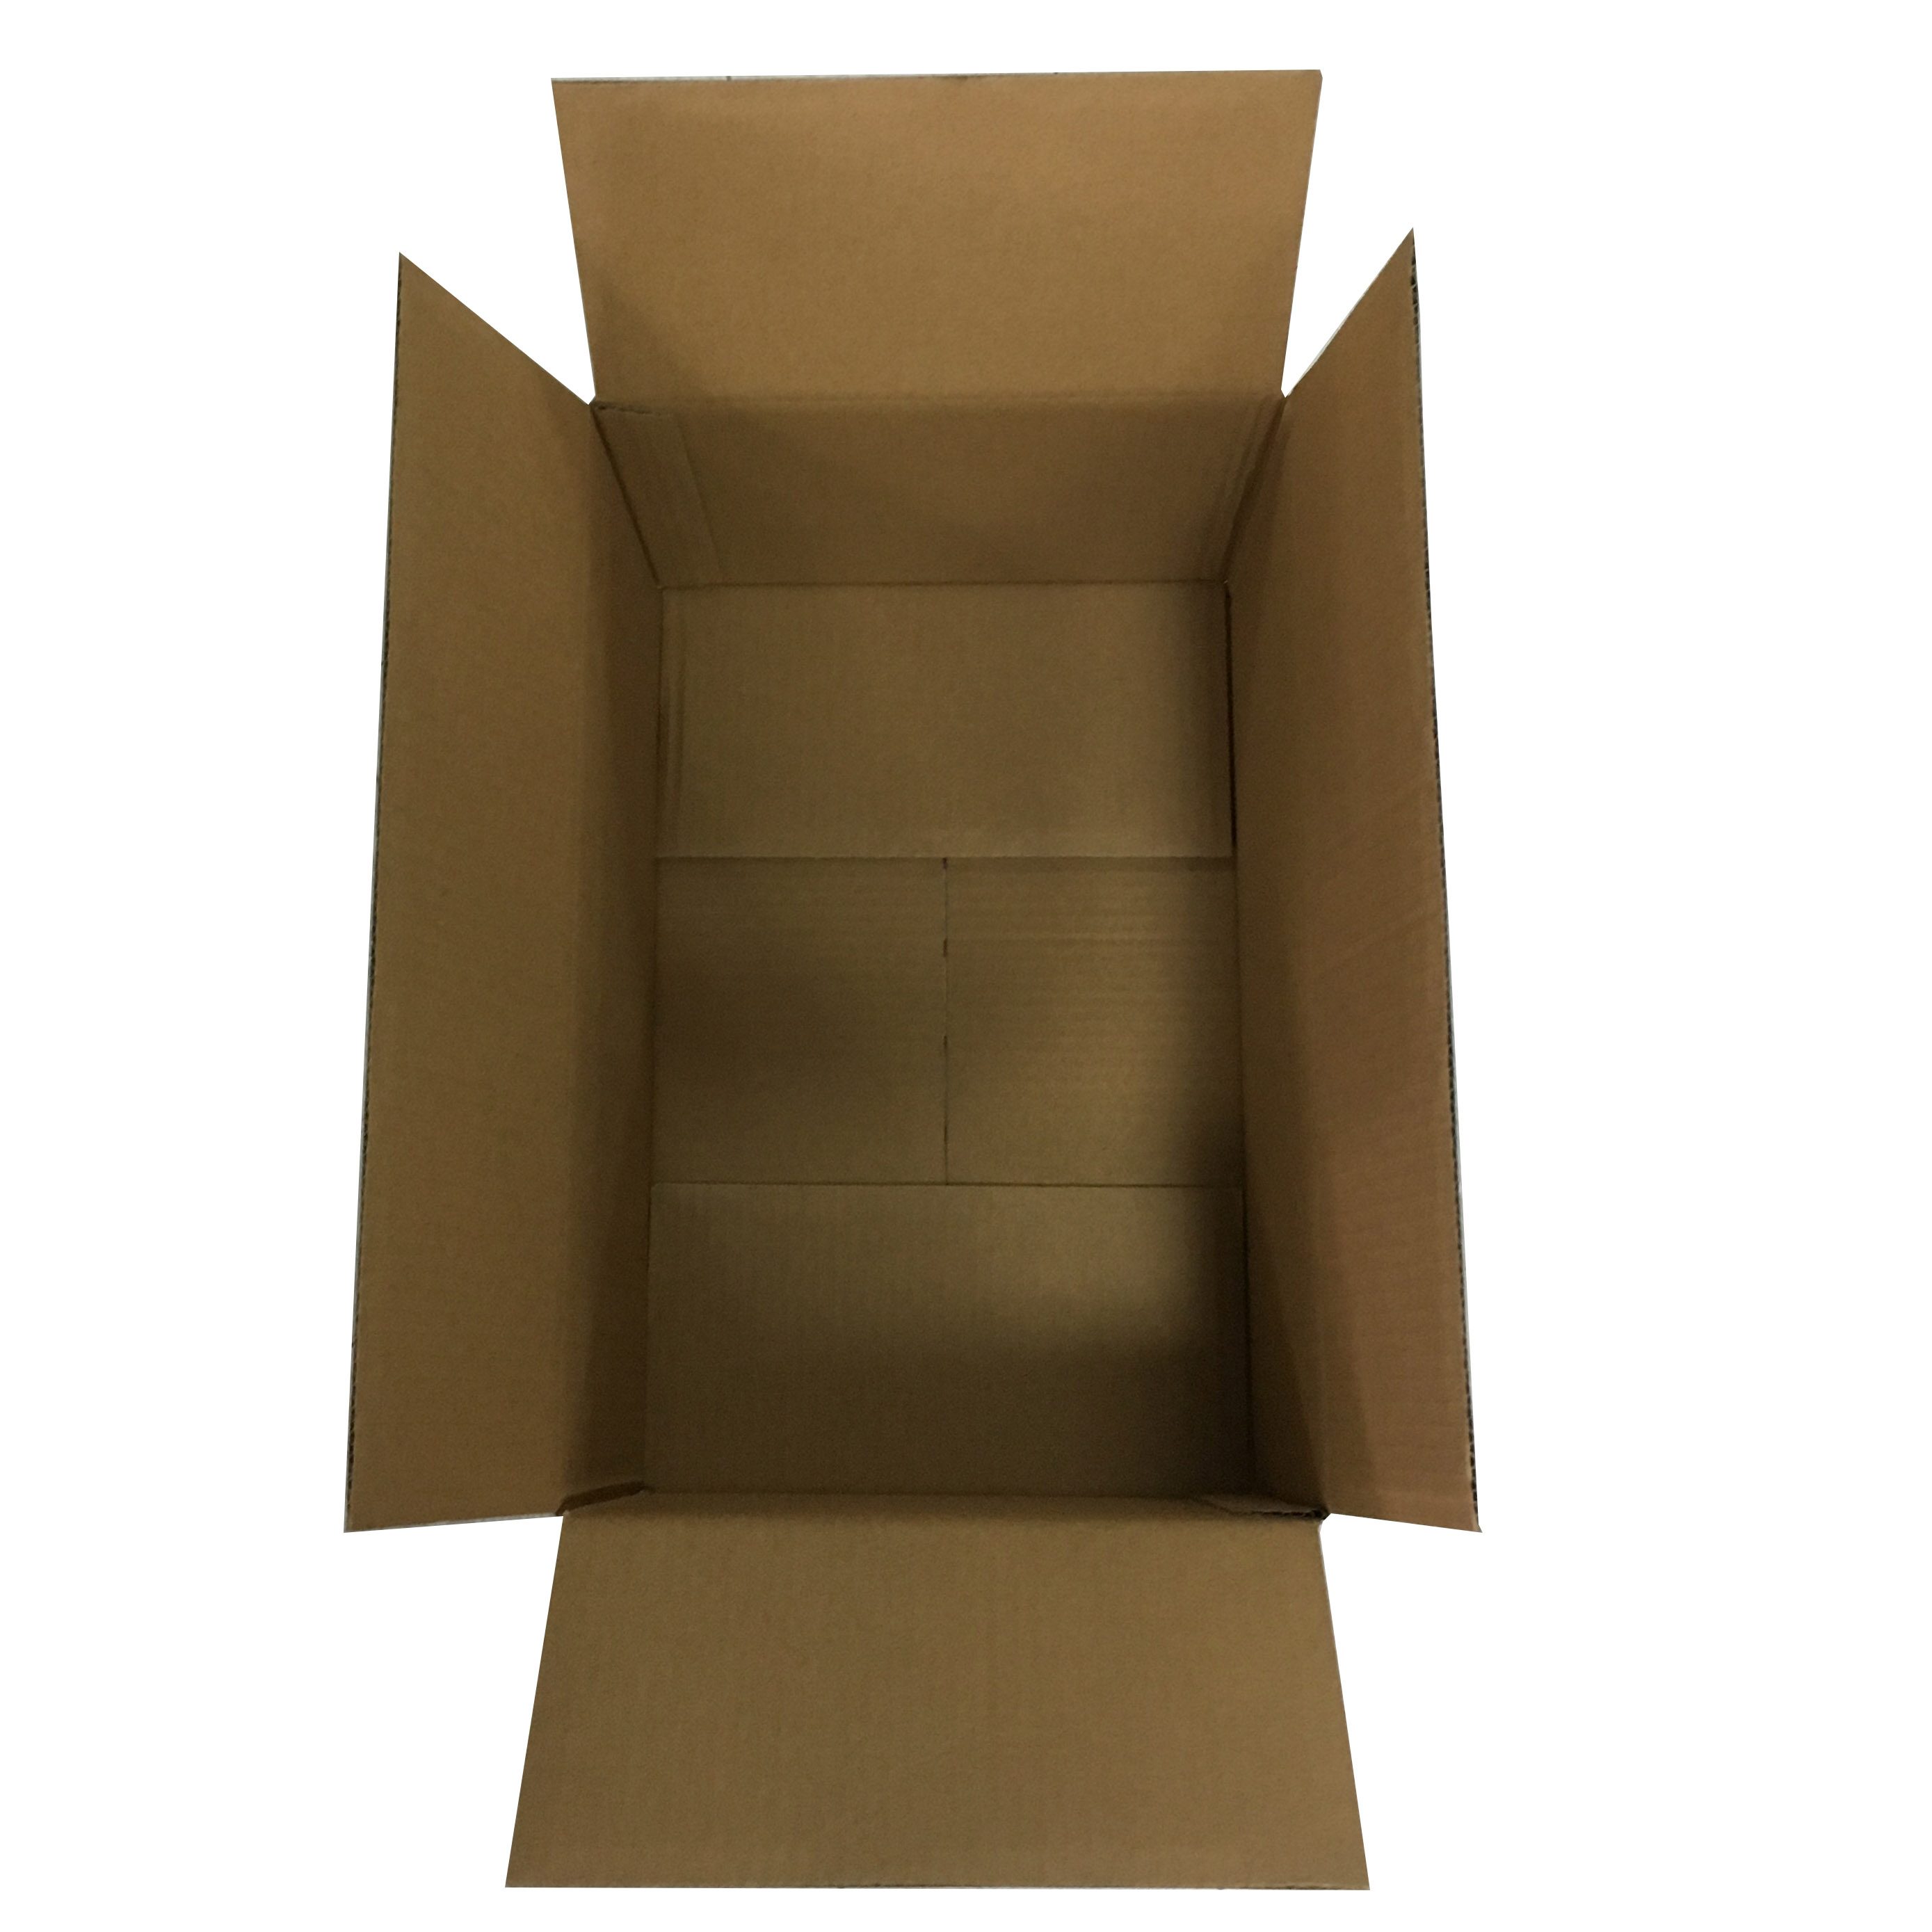 Foldable Removalist Box